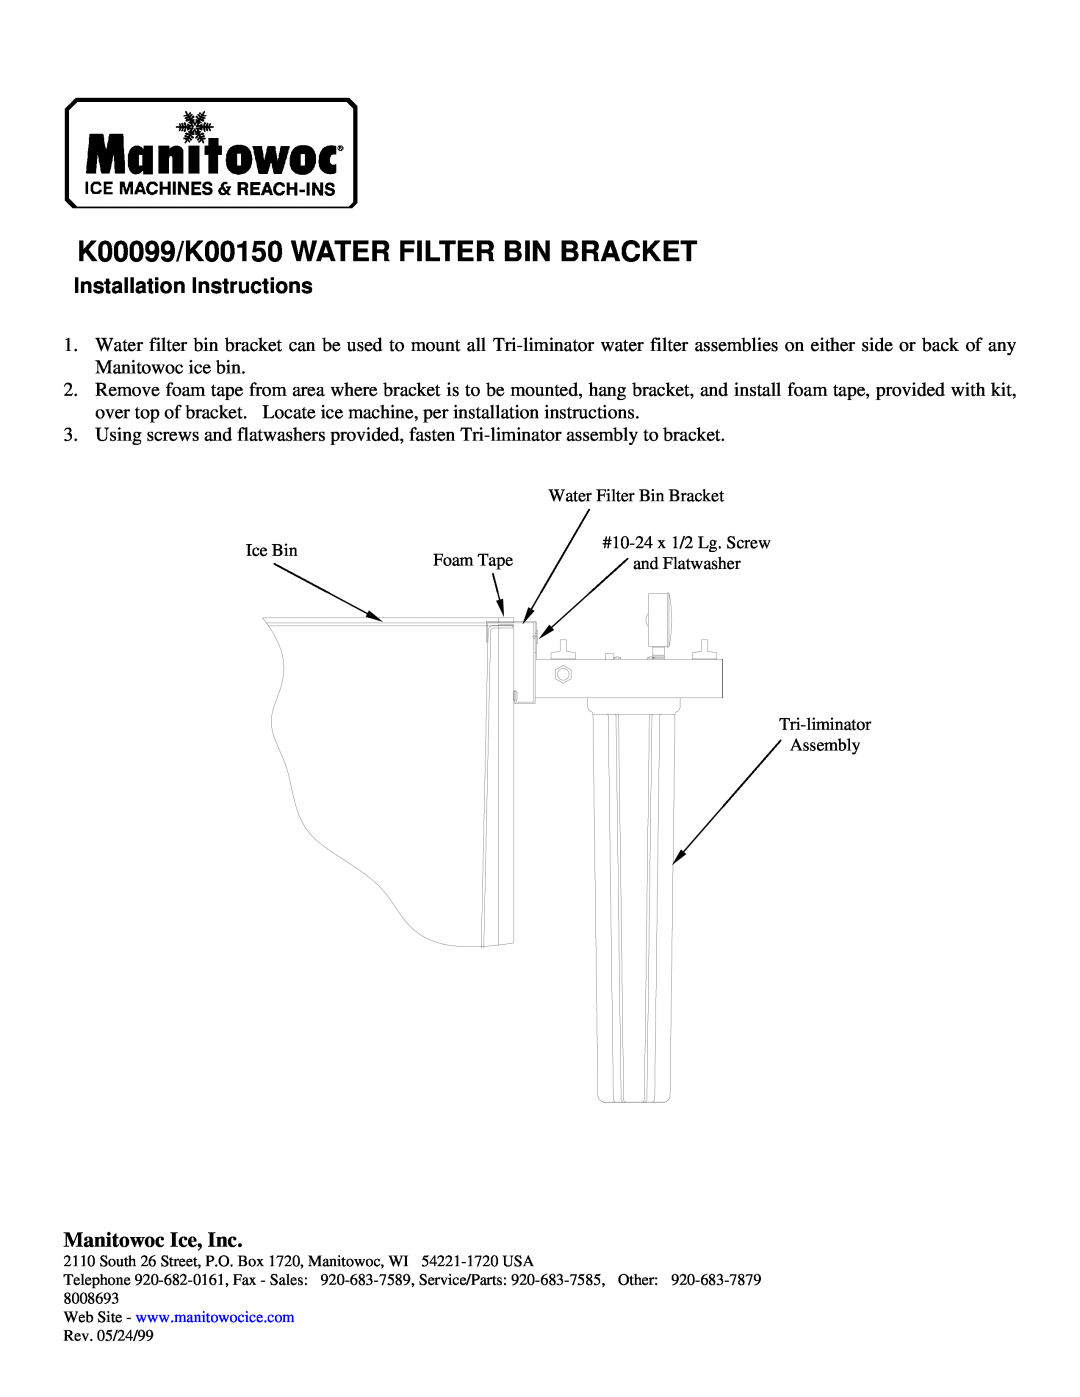 Manitowoc Ice installation instructions K00099/K00150 WATER FILTER BIN BRACKET, Installation Instructions 